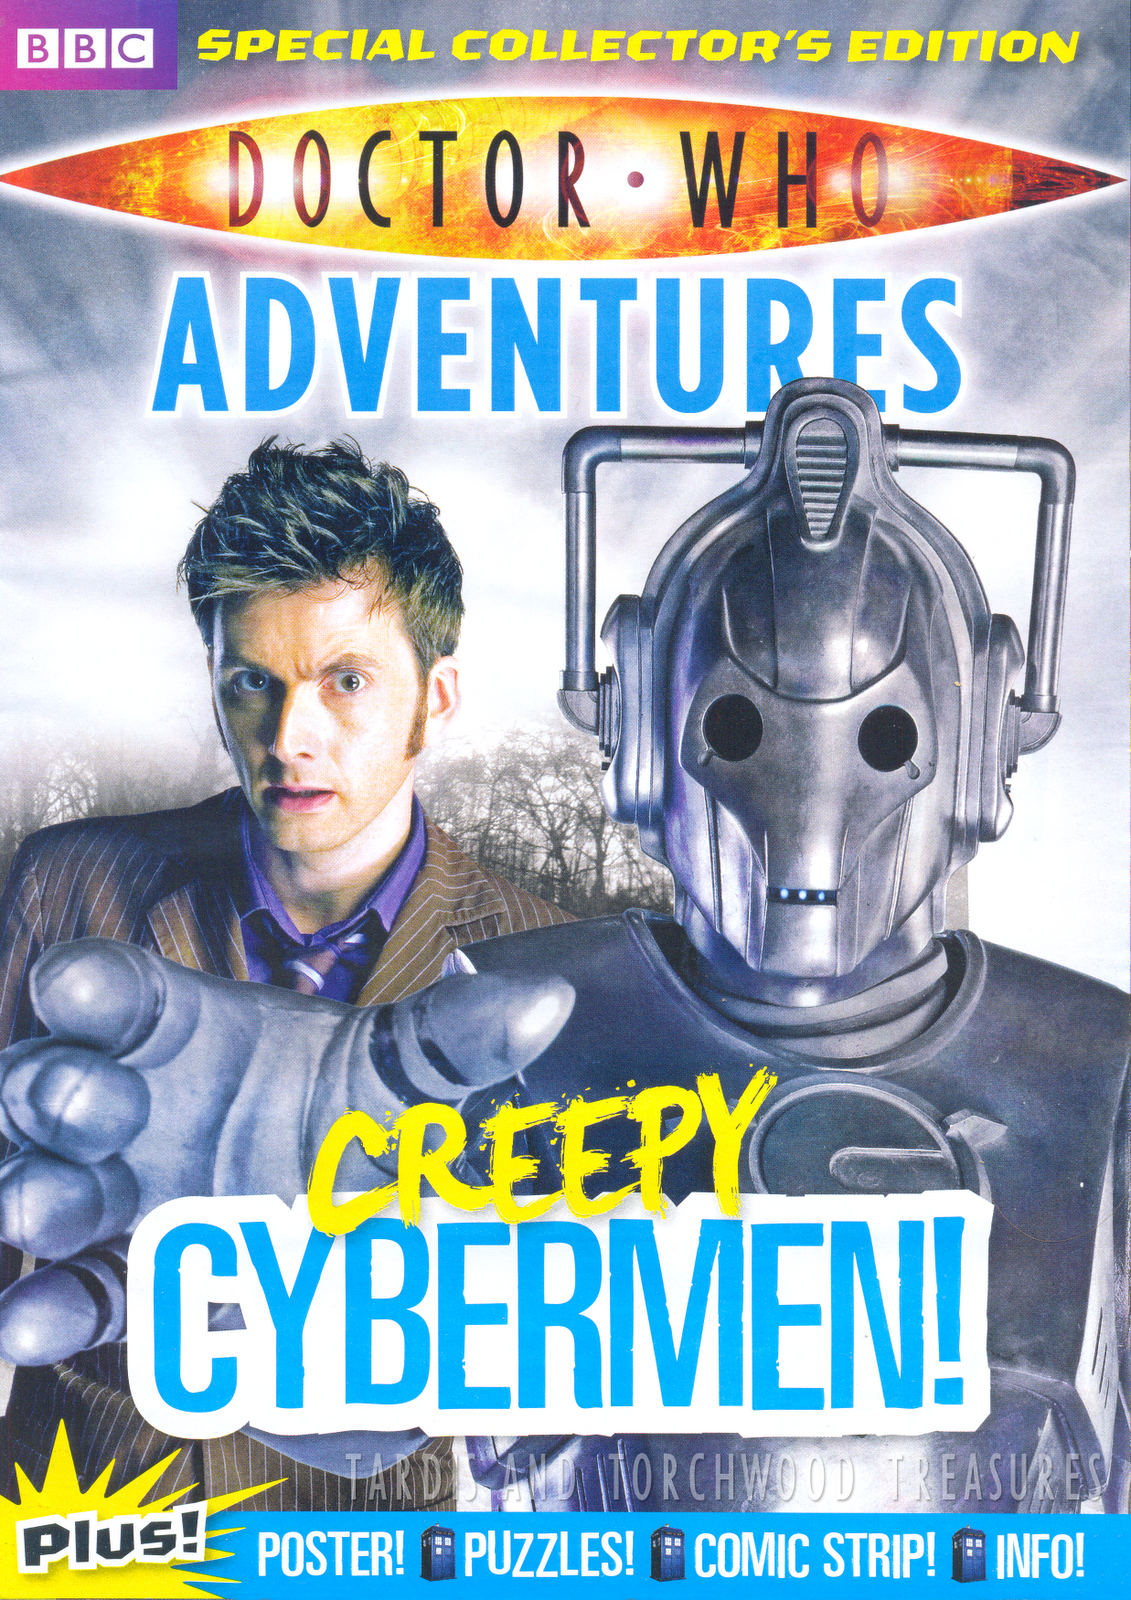 [Doctor+Who+Adventures+Creepy+Cybermen.png]